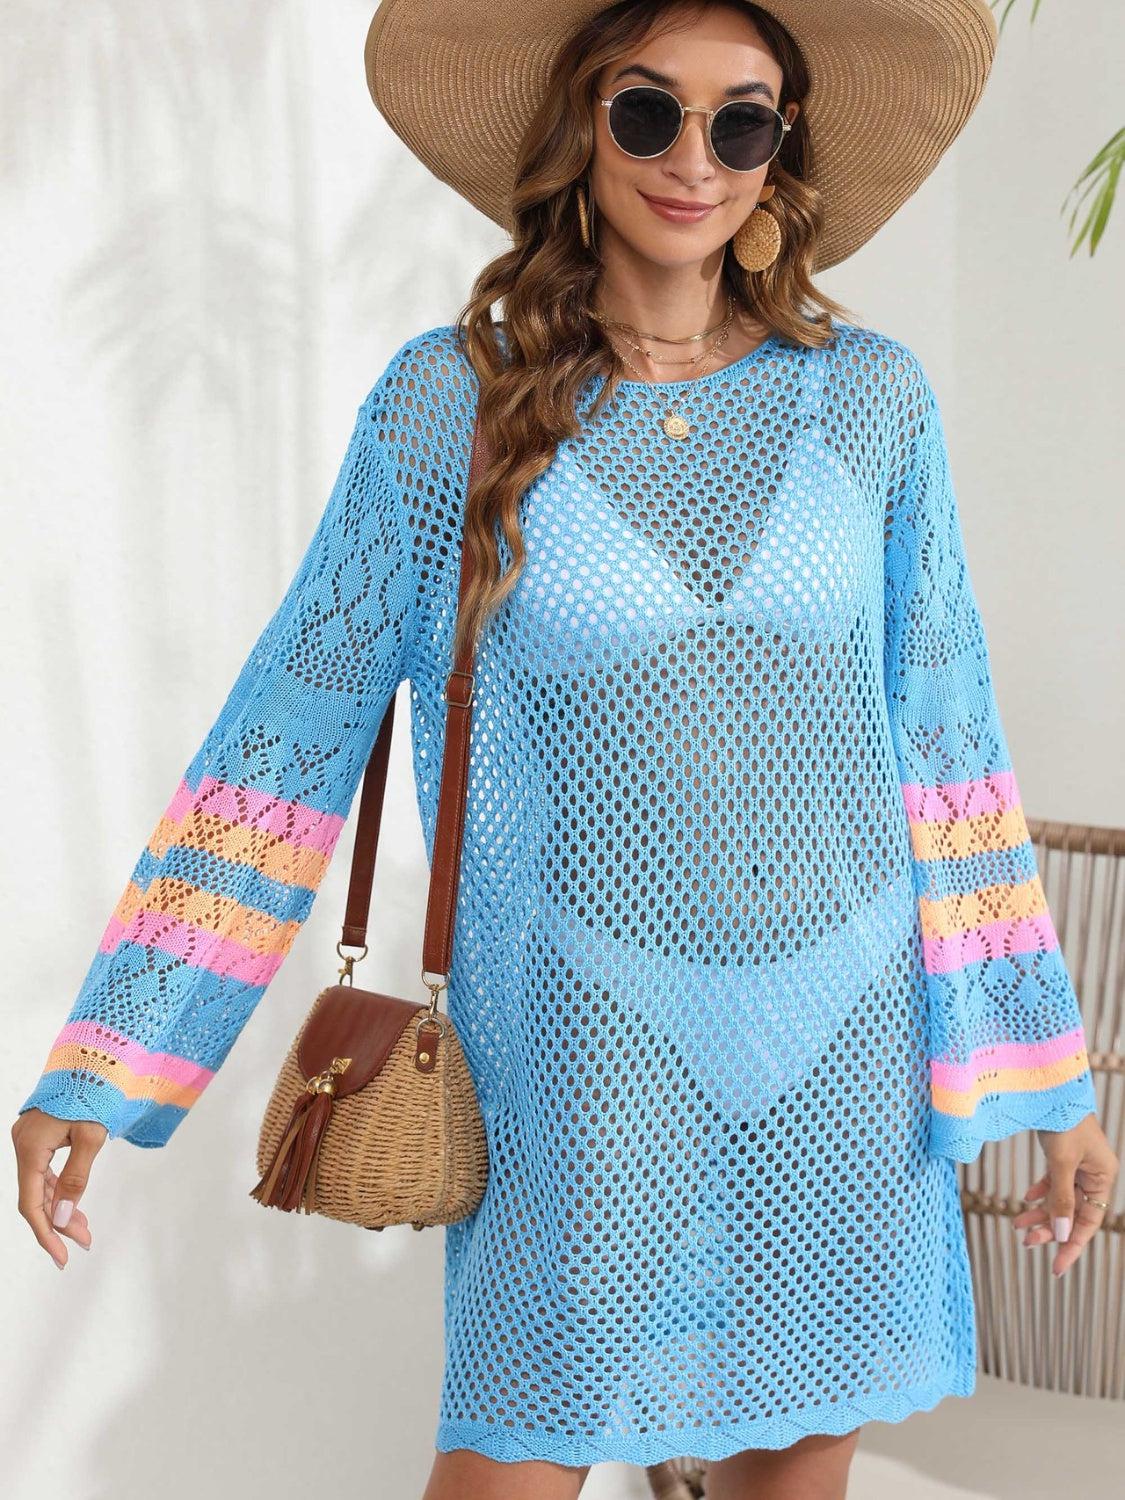 a woman wearing a blue crochet dress and hat